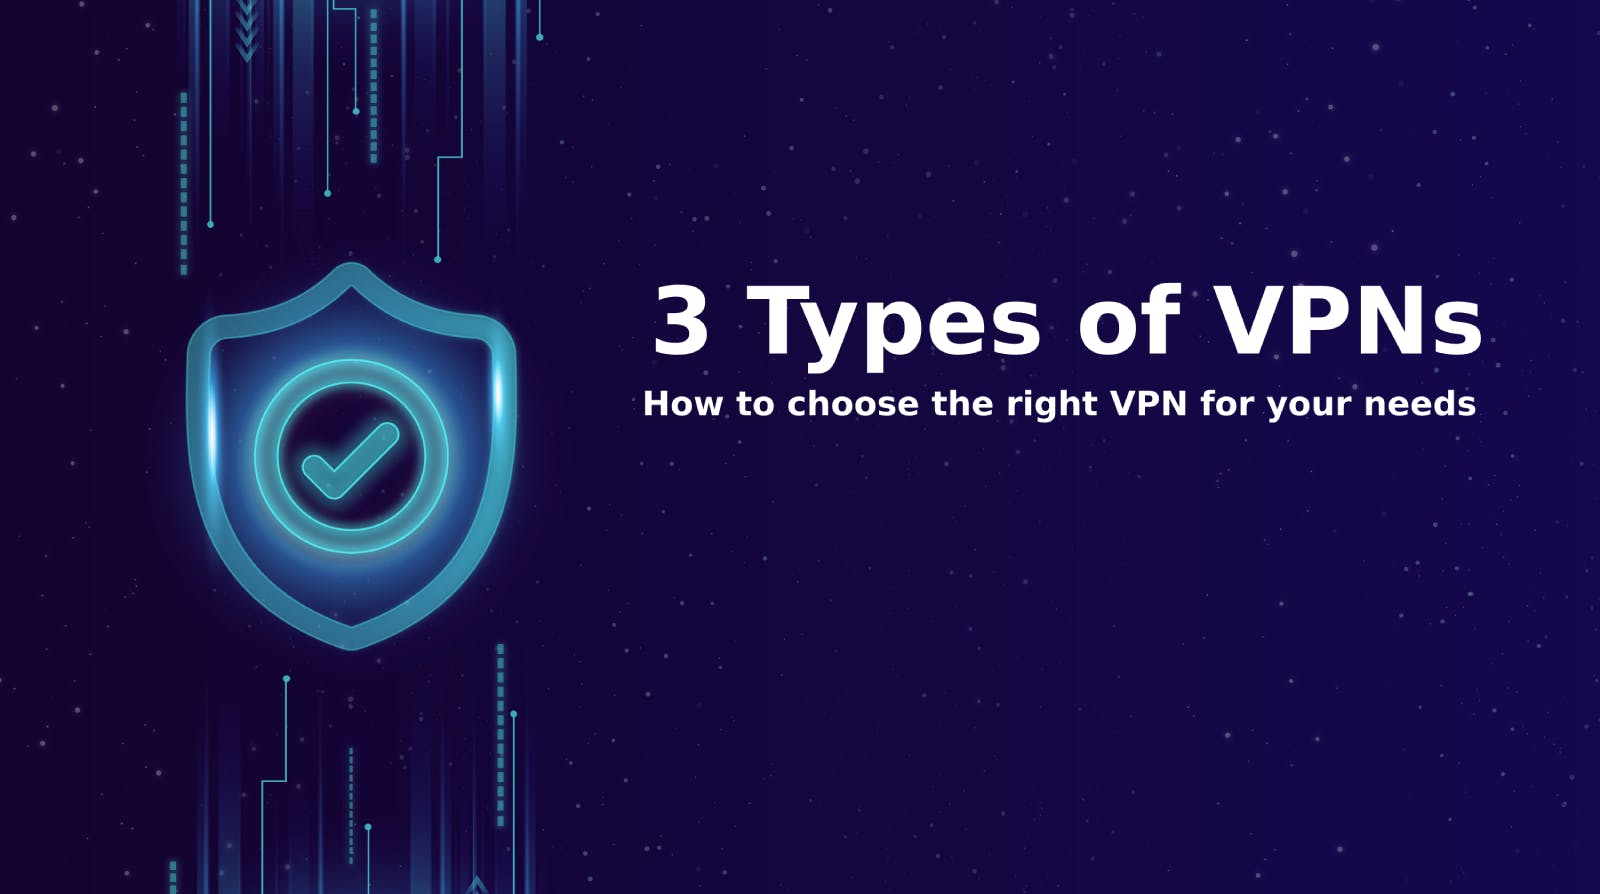 3 Types of VPNs